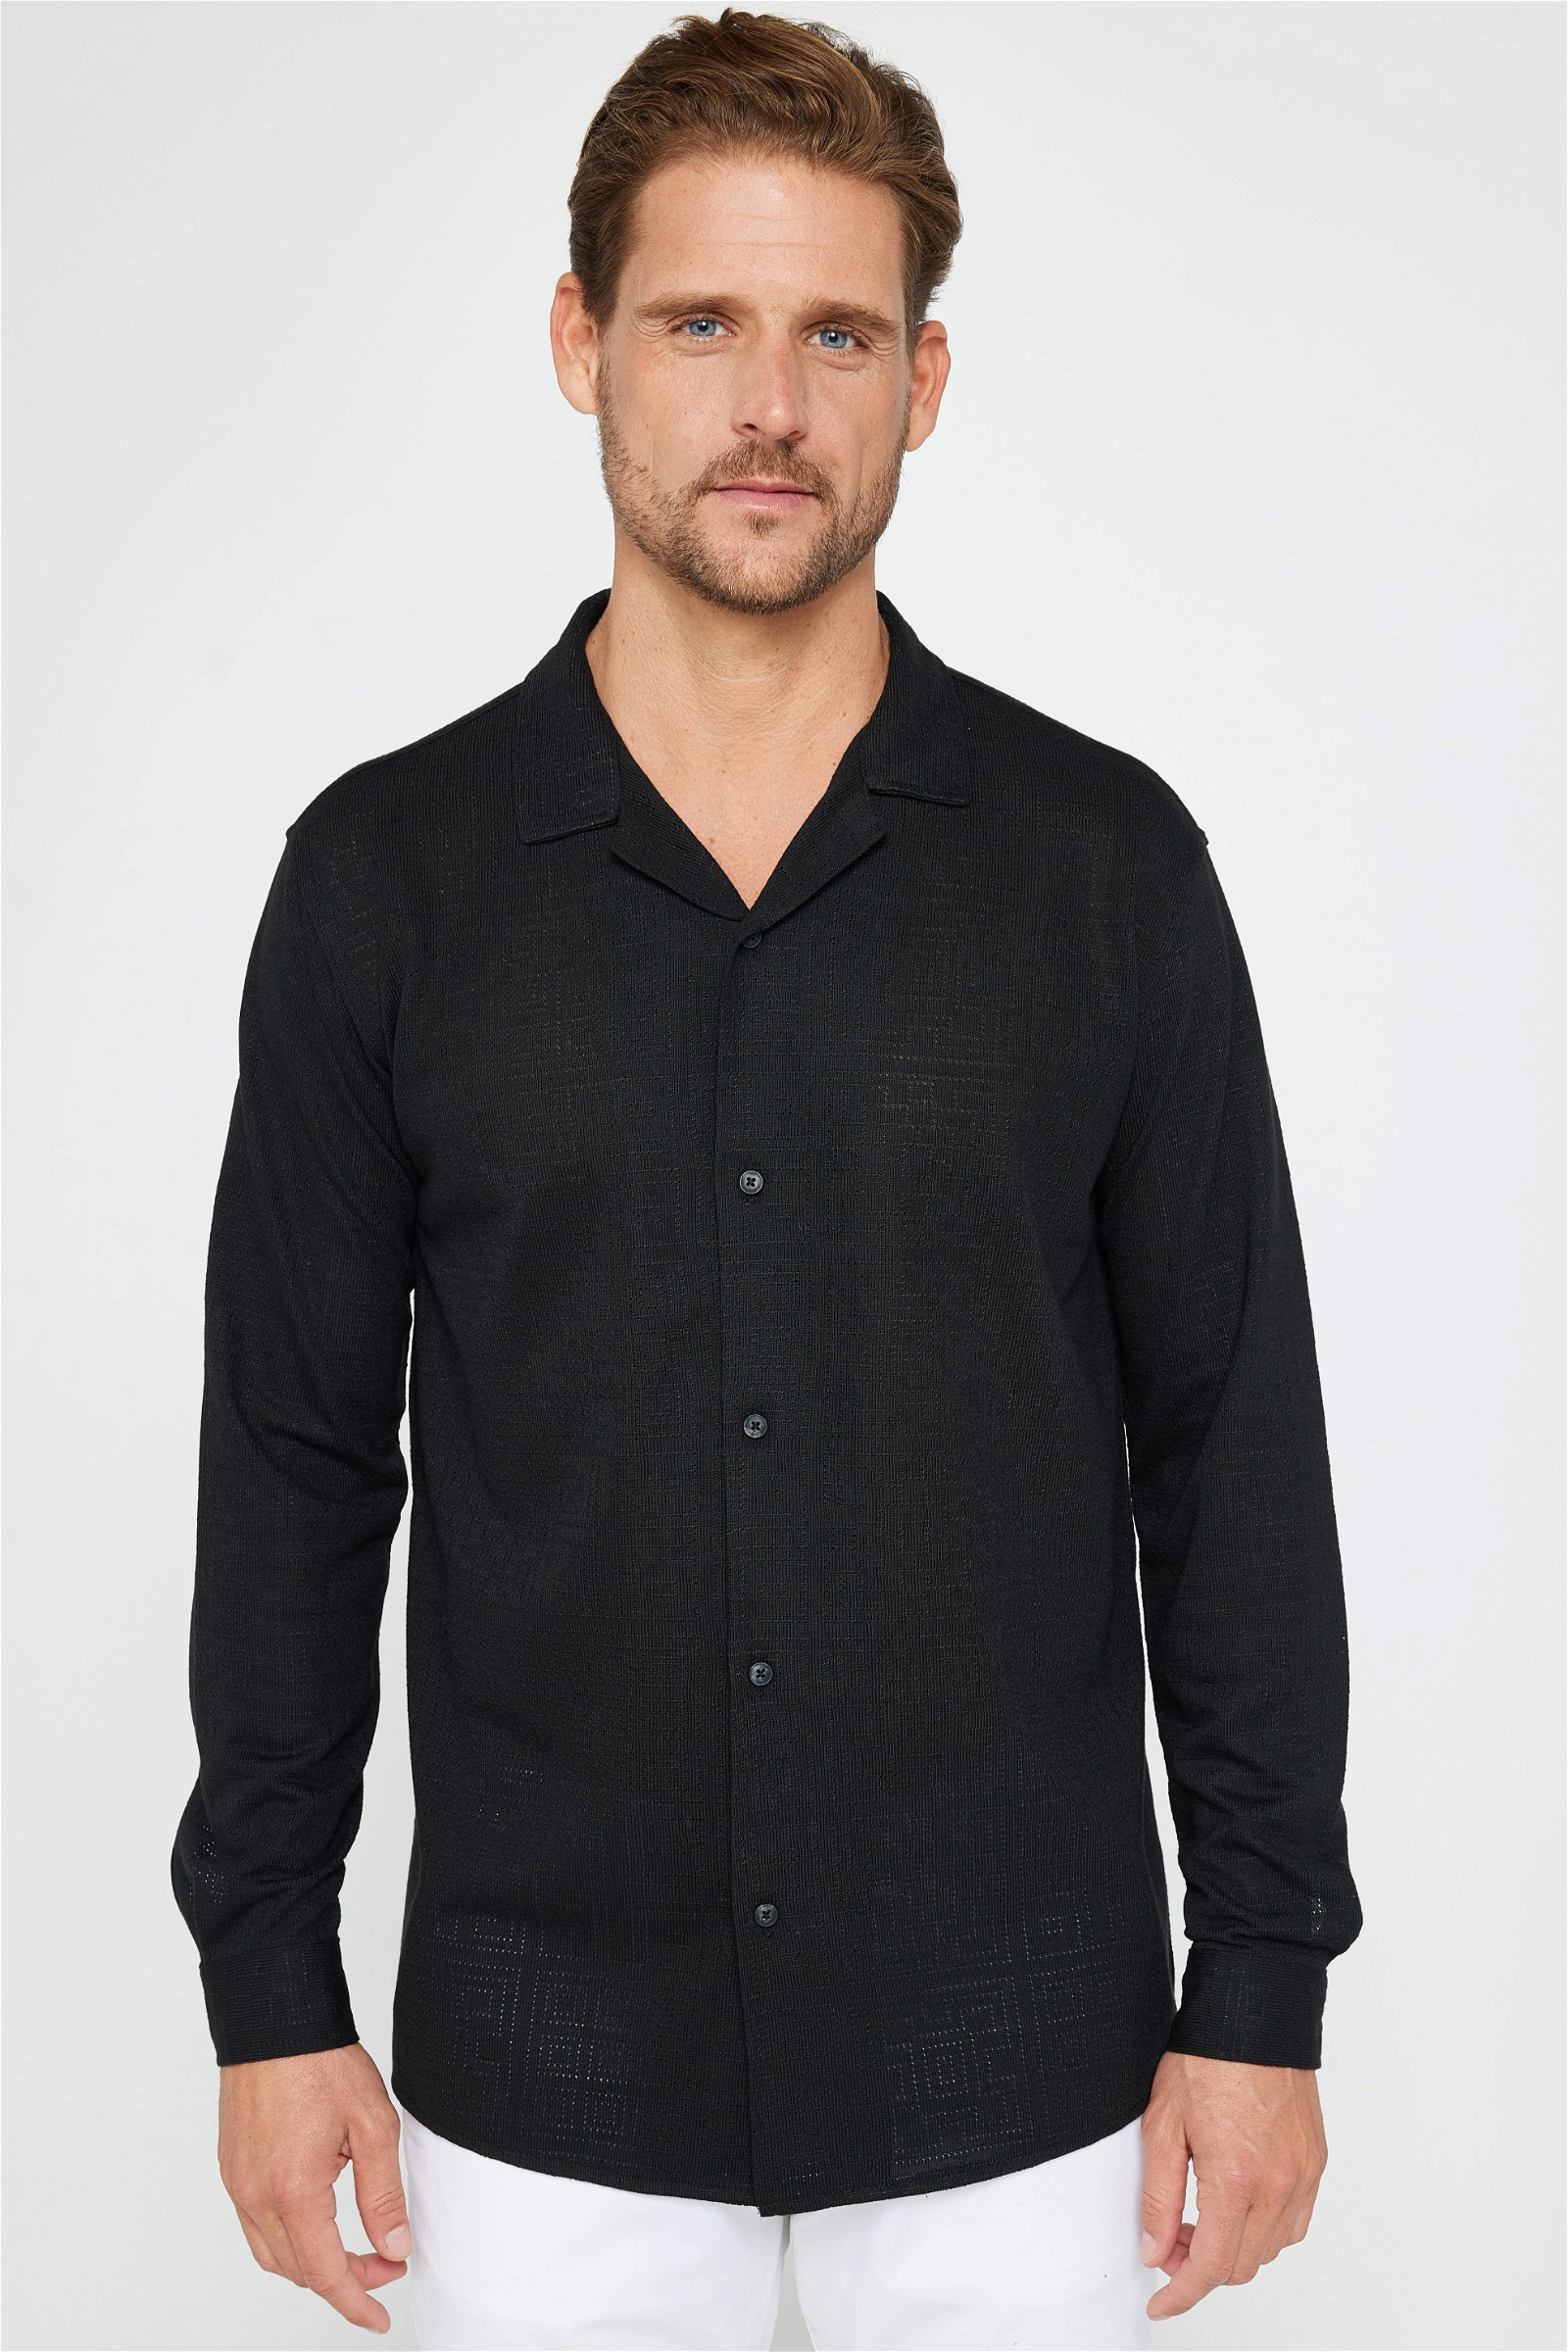 Knitted Black Shirt